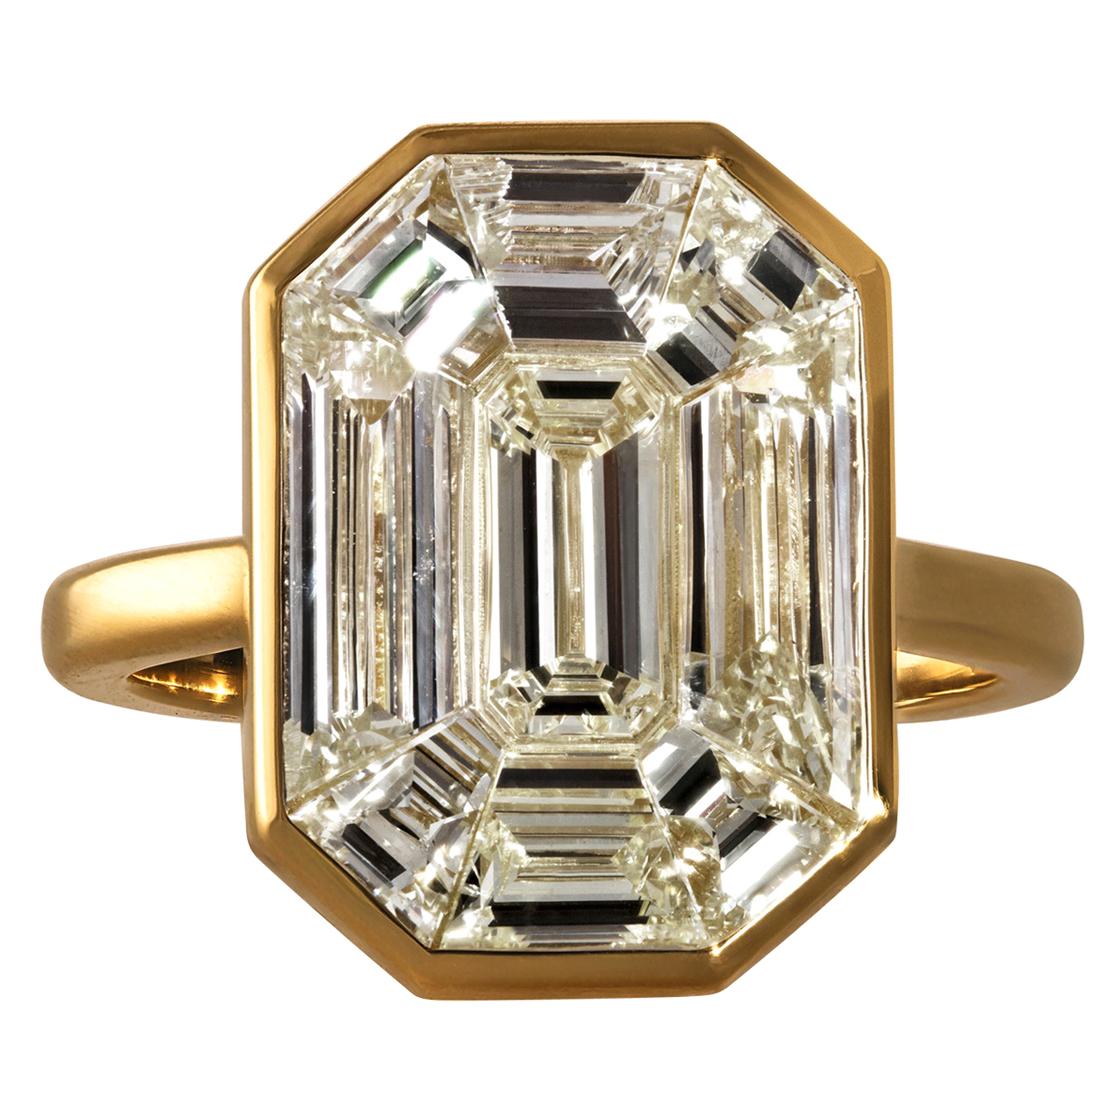 Pie Cut Diamond at best price in Surat by Hans Shine Jewel | ID: 23369029873